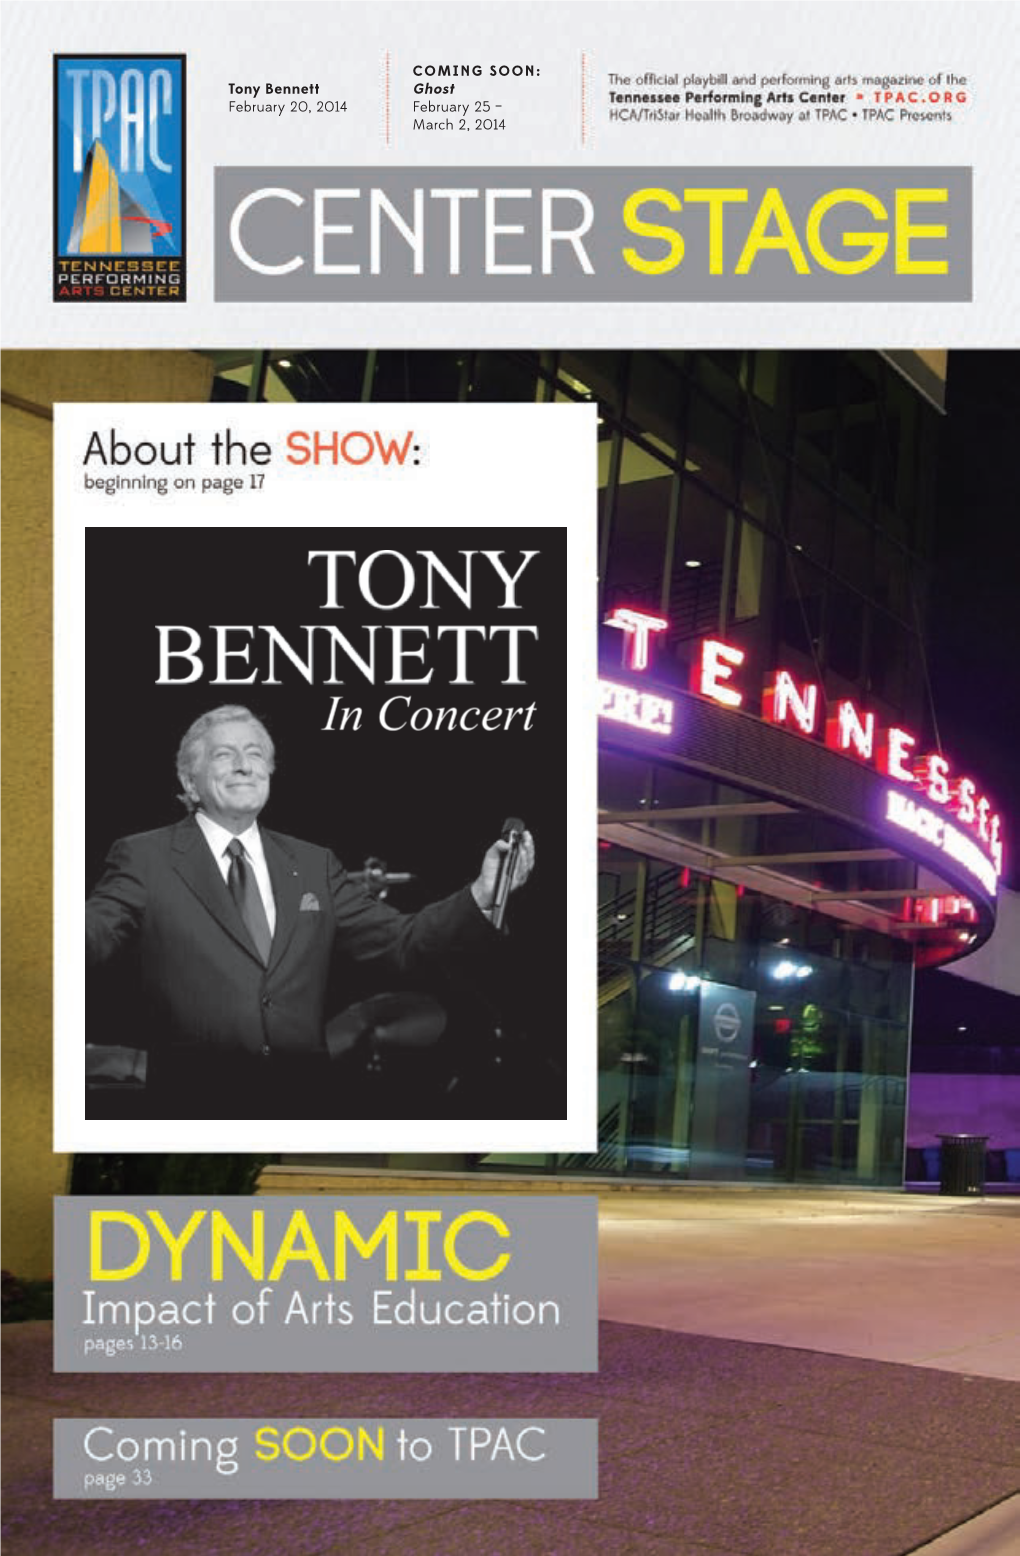 Tony Bennett G Host February 20, 2014 February 25 – March 2, 2014 GAT127.13-Nashvilleartsad 7.125X10.875 FINAL.Indd 1 One Contact